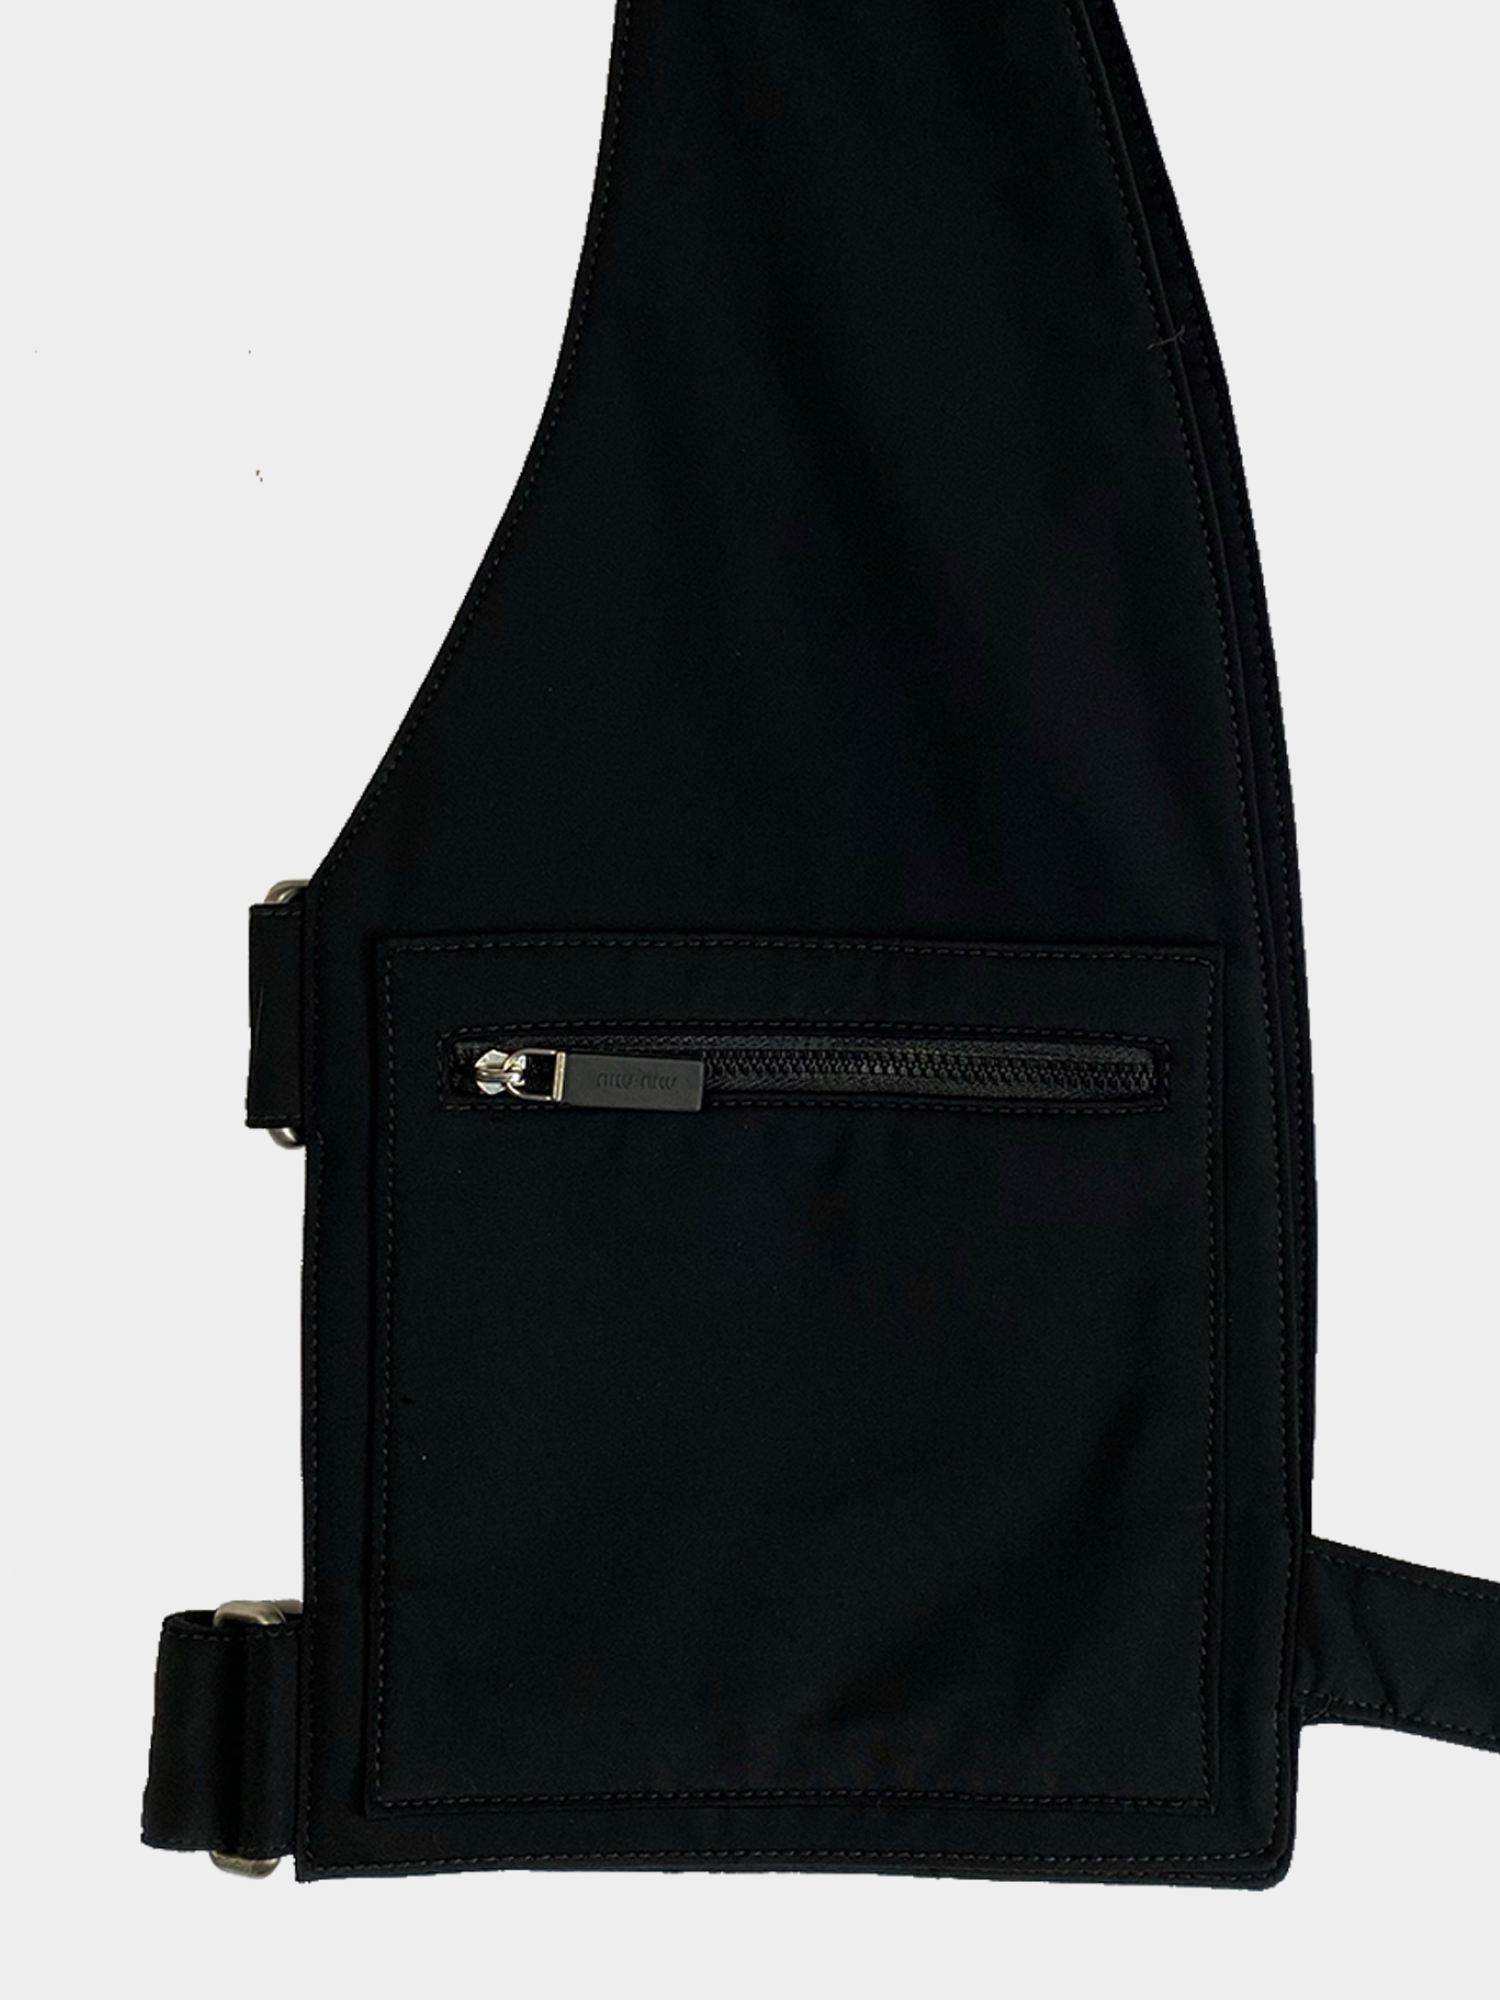 Miu Miu Black Leather Cargo Bag - Ākaibu Store